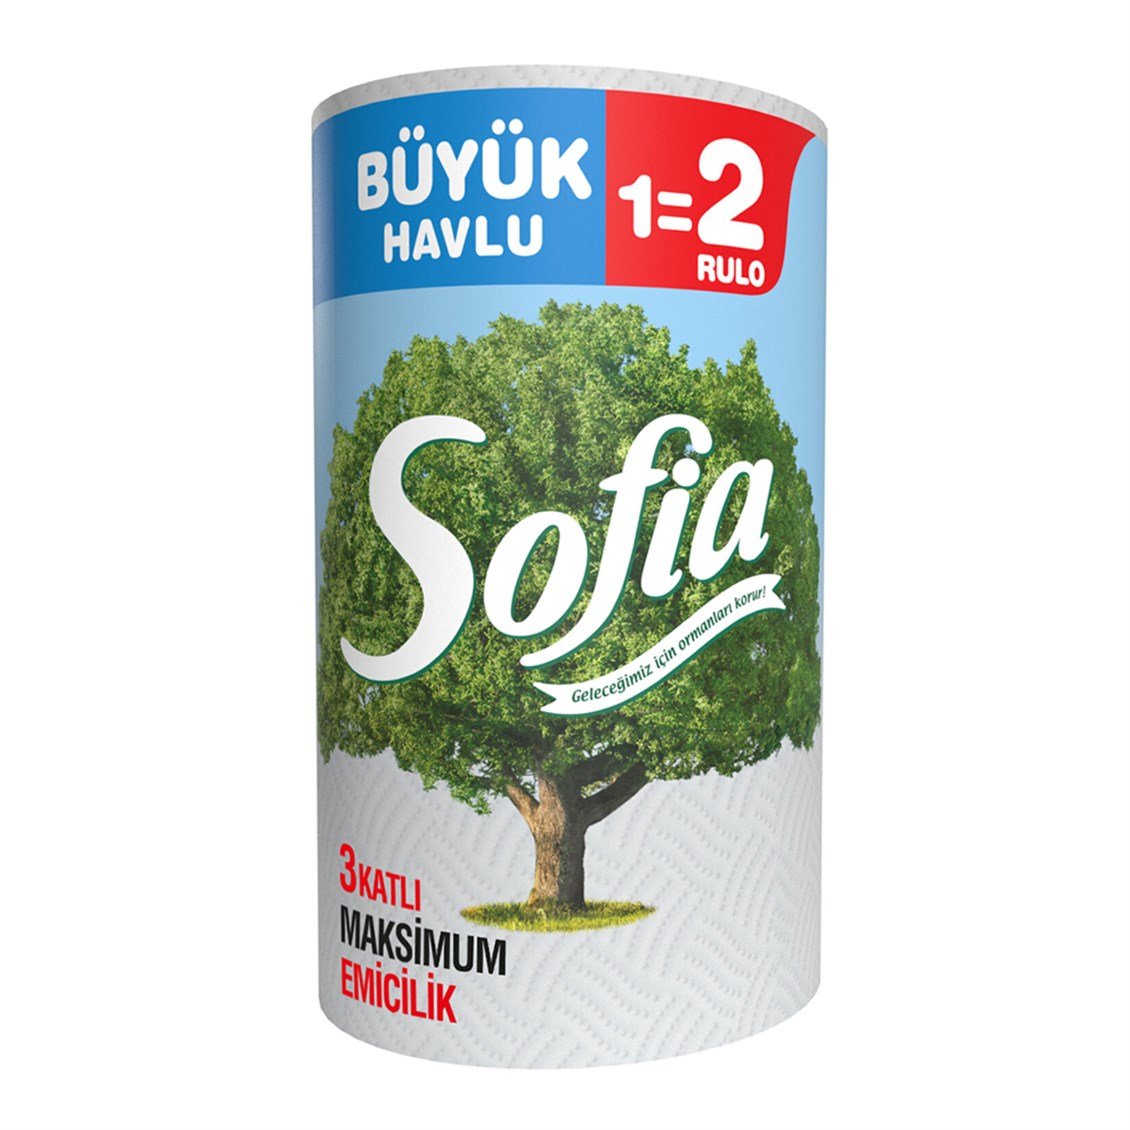 Sofia Kağıt Havlu Büyük Rulo 1=2 - Onur Market